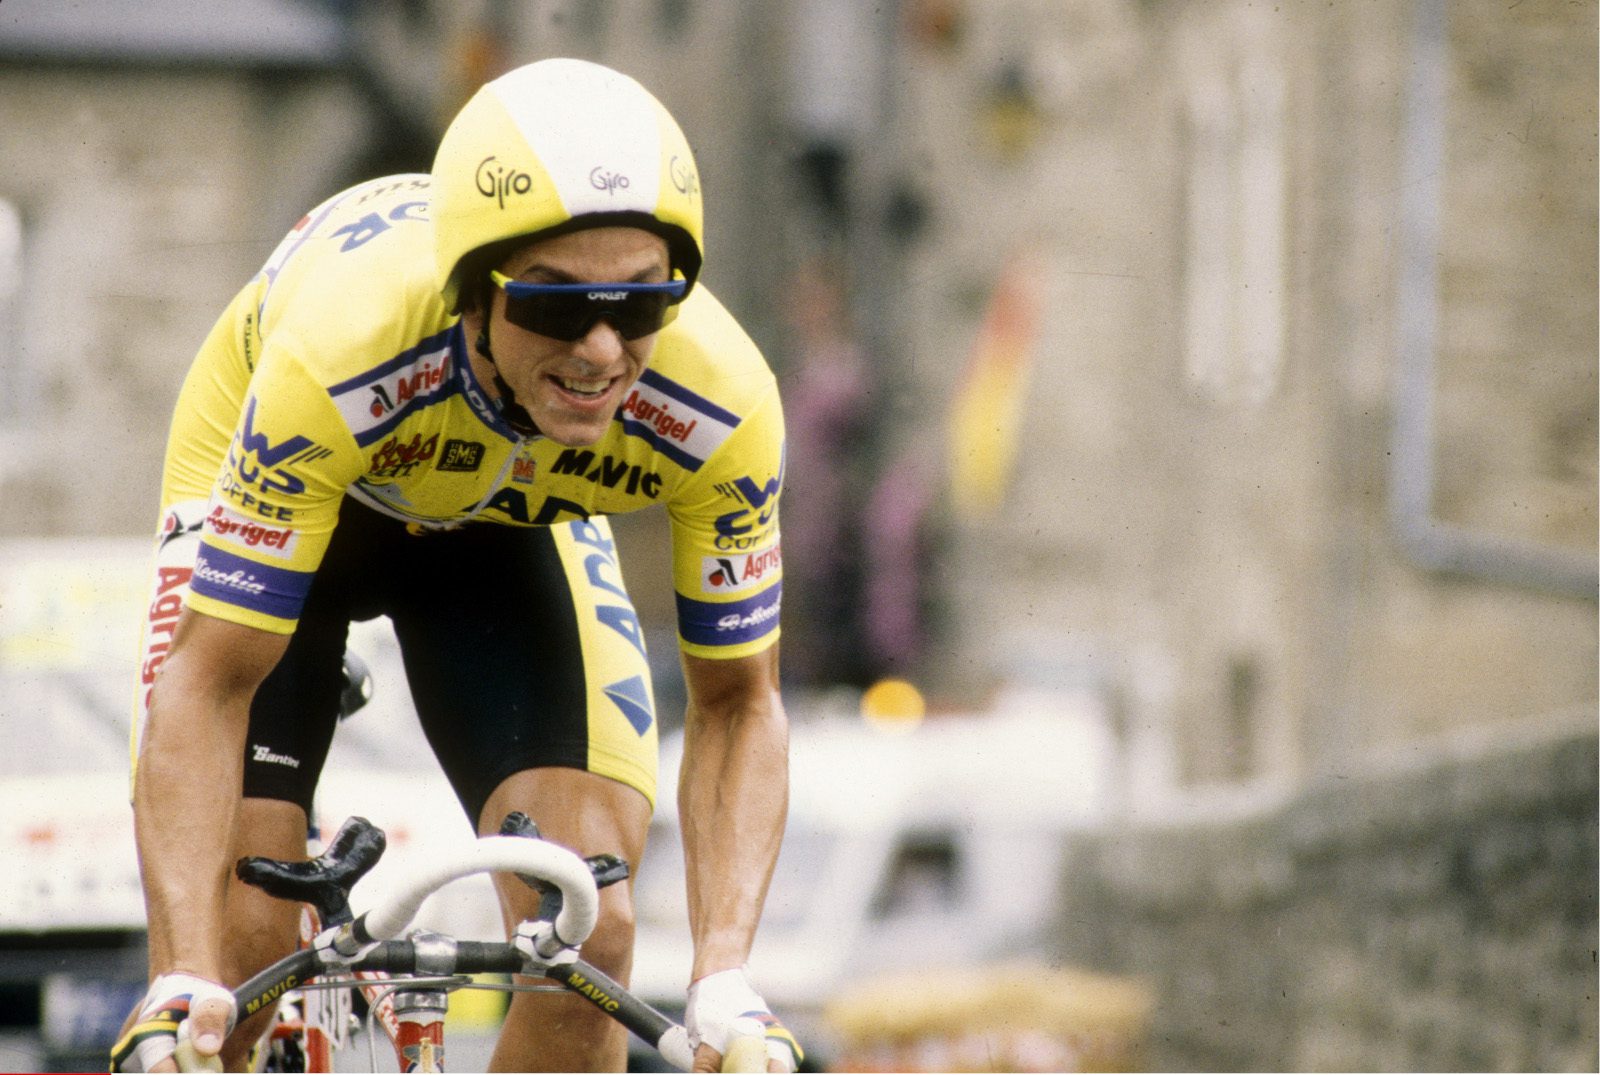 17/7/1989 Tour de France 1989. Stage 16 - Gap to Briancon. Laurent Fignon looks over his shoulder at the chasing Greg LeMond. Photo: Offside / L'Equipe.